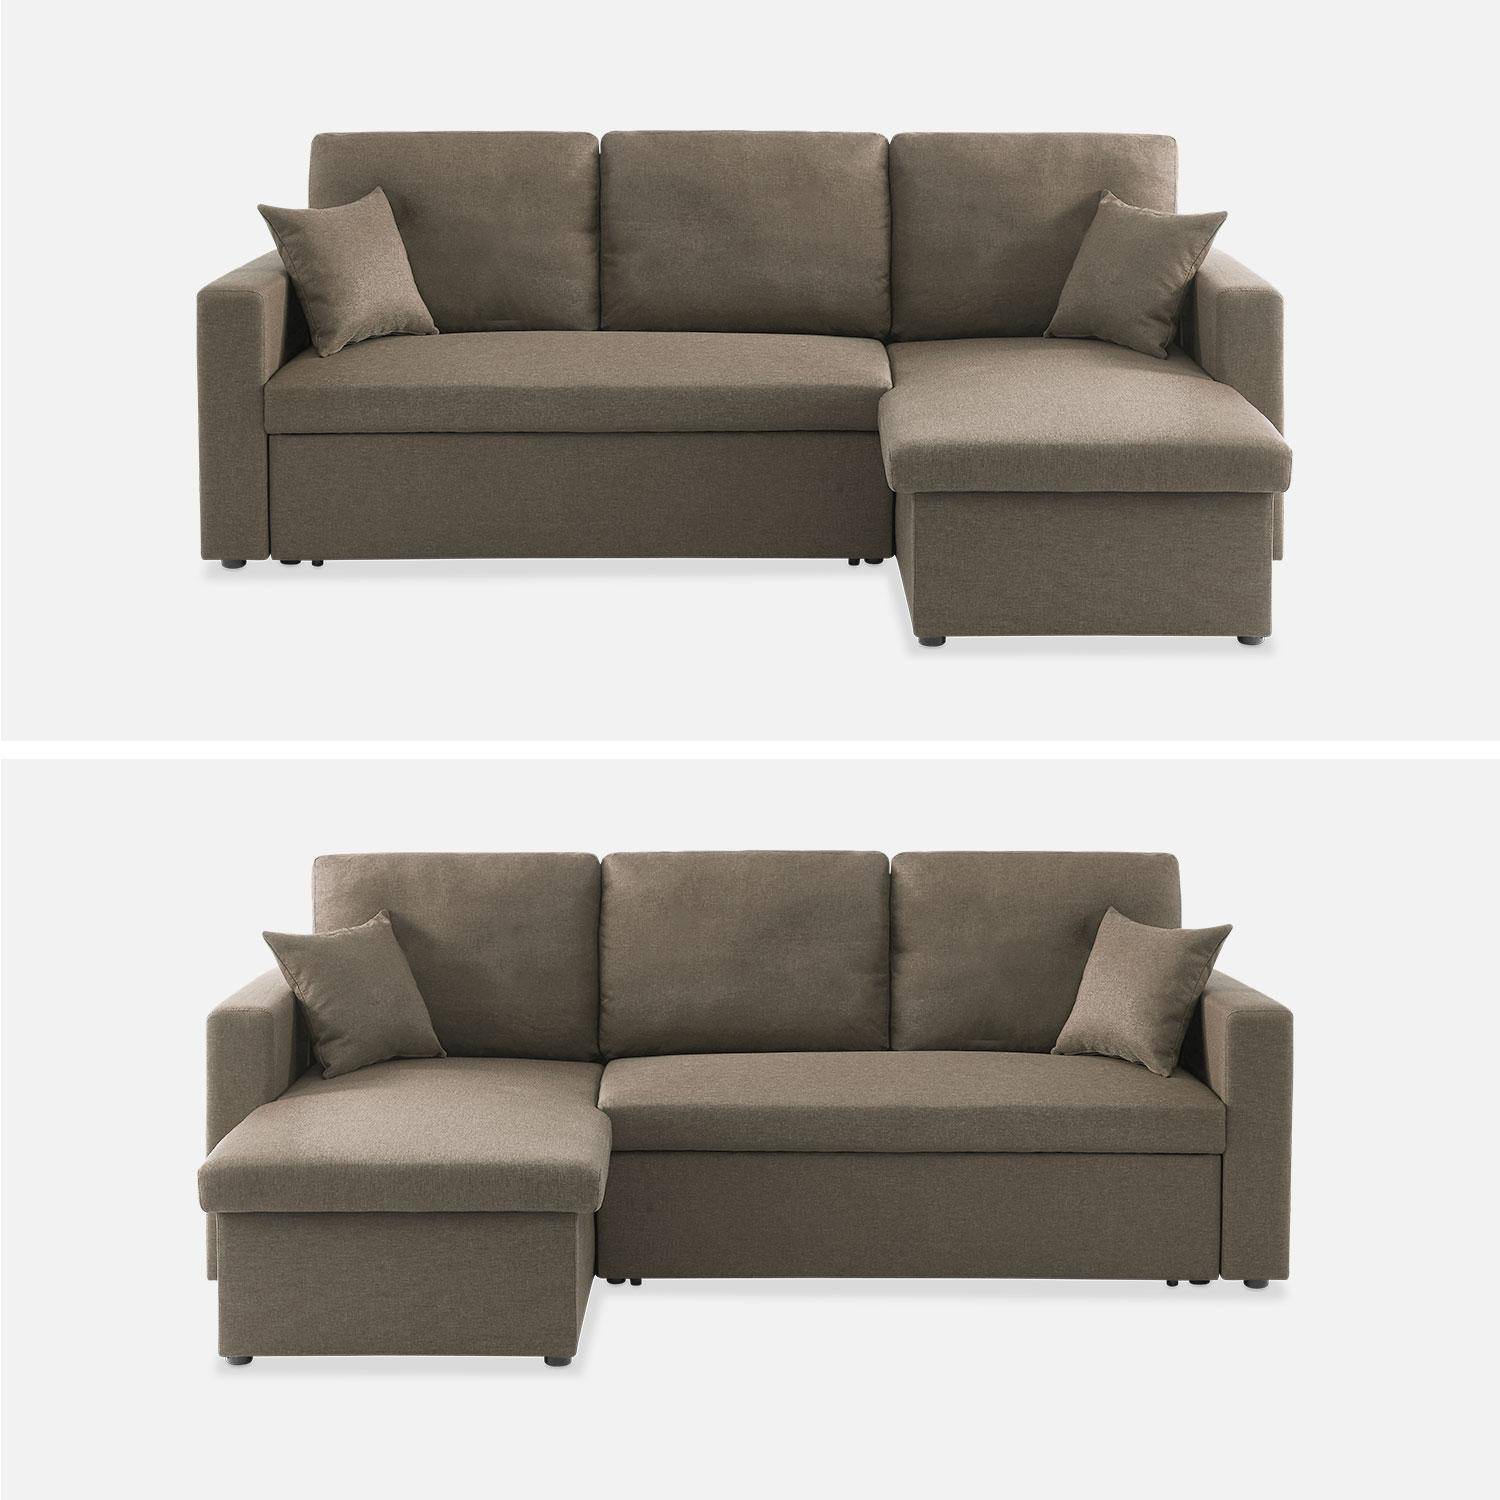 3-seater reversible brown corner sofa bed with storage box, brown, L219xD81xH68cm, IDA,sweeek,Photo7